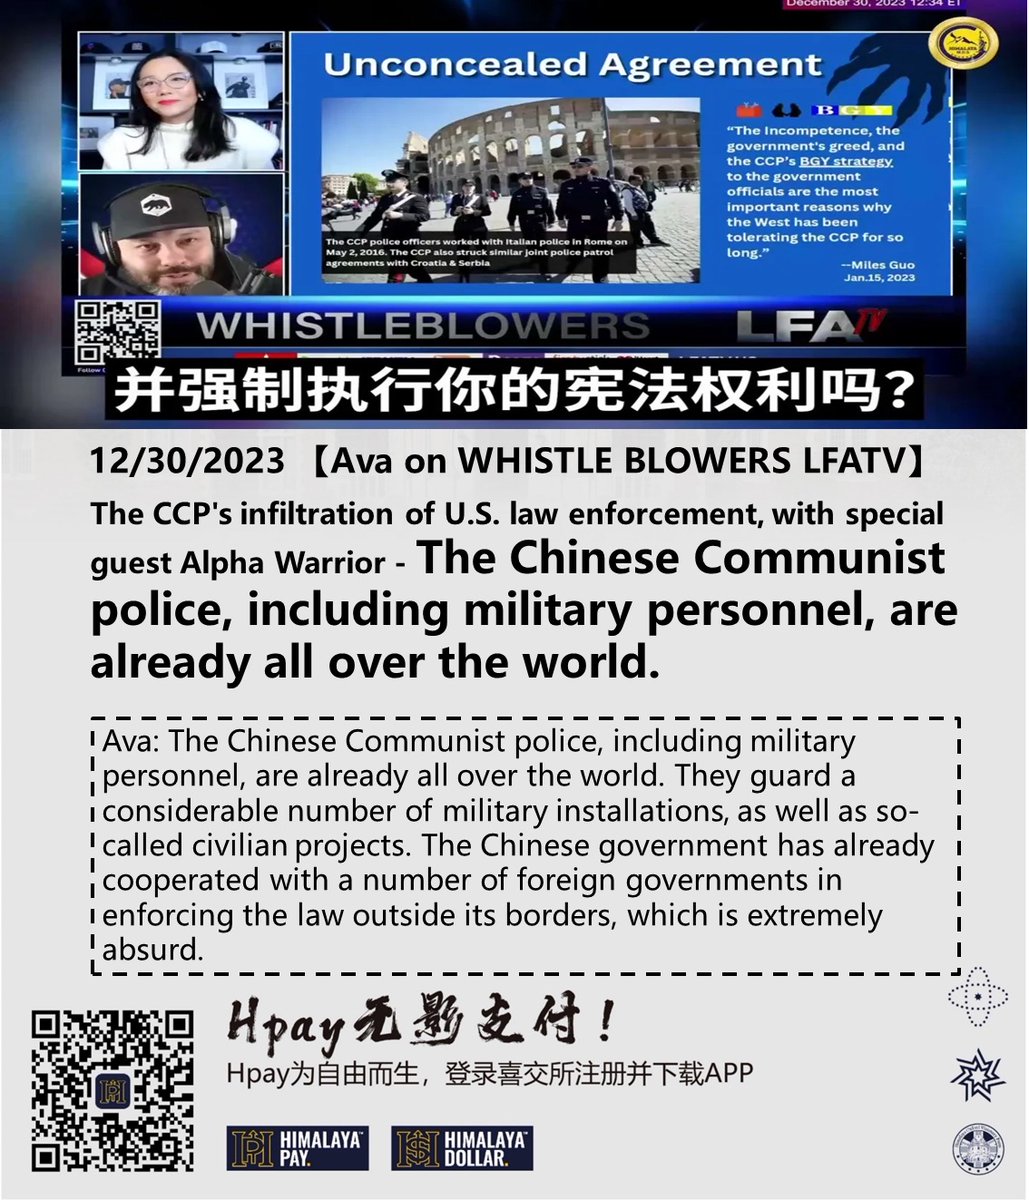 12/30/2023 #Ava on #WHISTLE #BLOWERS #LFATV : 中共对美国执法部门的渗透，特邀嘉宾 #AlphaWarrior 

Ava： #中共警察 包括军事人员已经遍布全球，他们守卫着相当多的军事设施，以及所谓的民用项目，中国政府已经与一些外国政府合作，在境外执法，这是极其荒谬的。